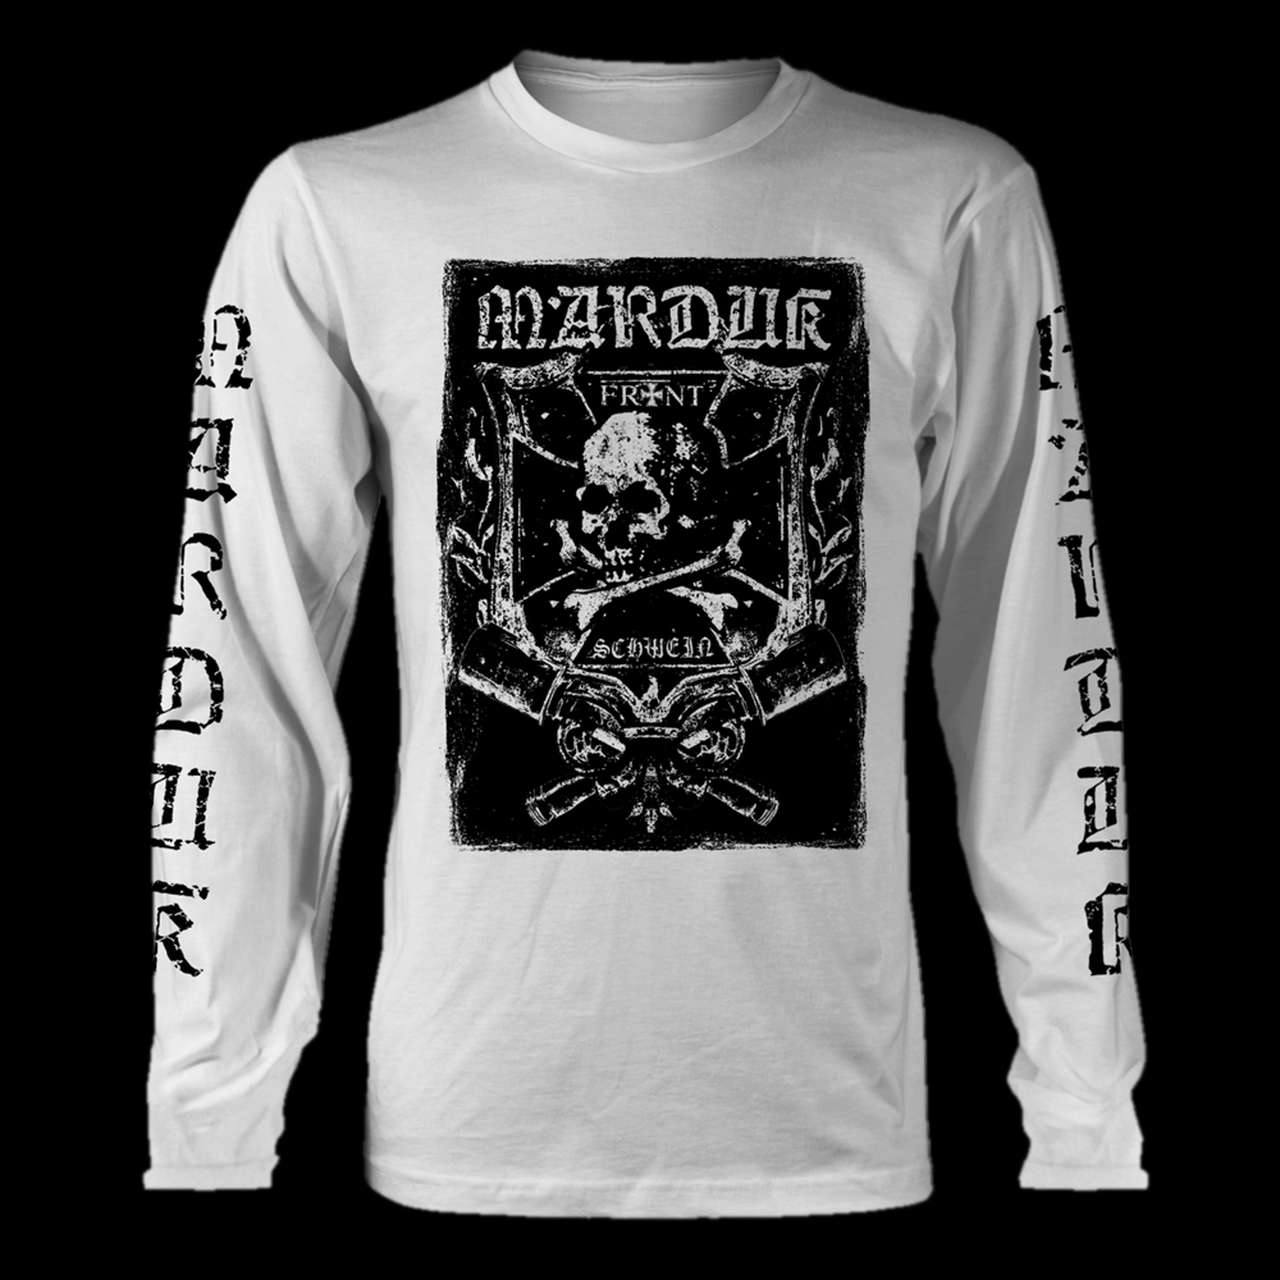 Marduk - Frontschwein (White) (Long Sleeve T-Shirt)